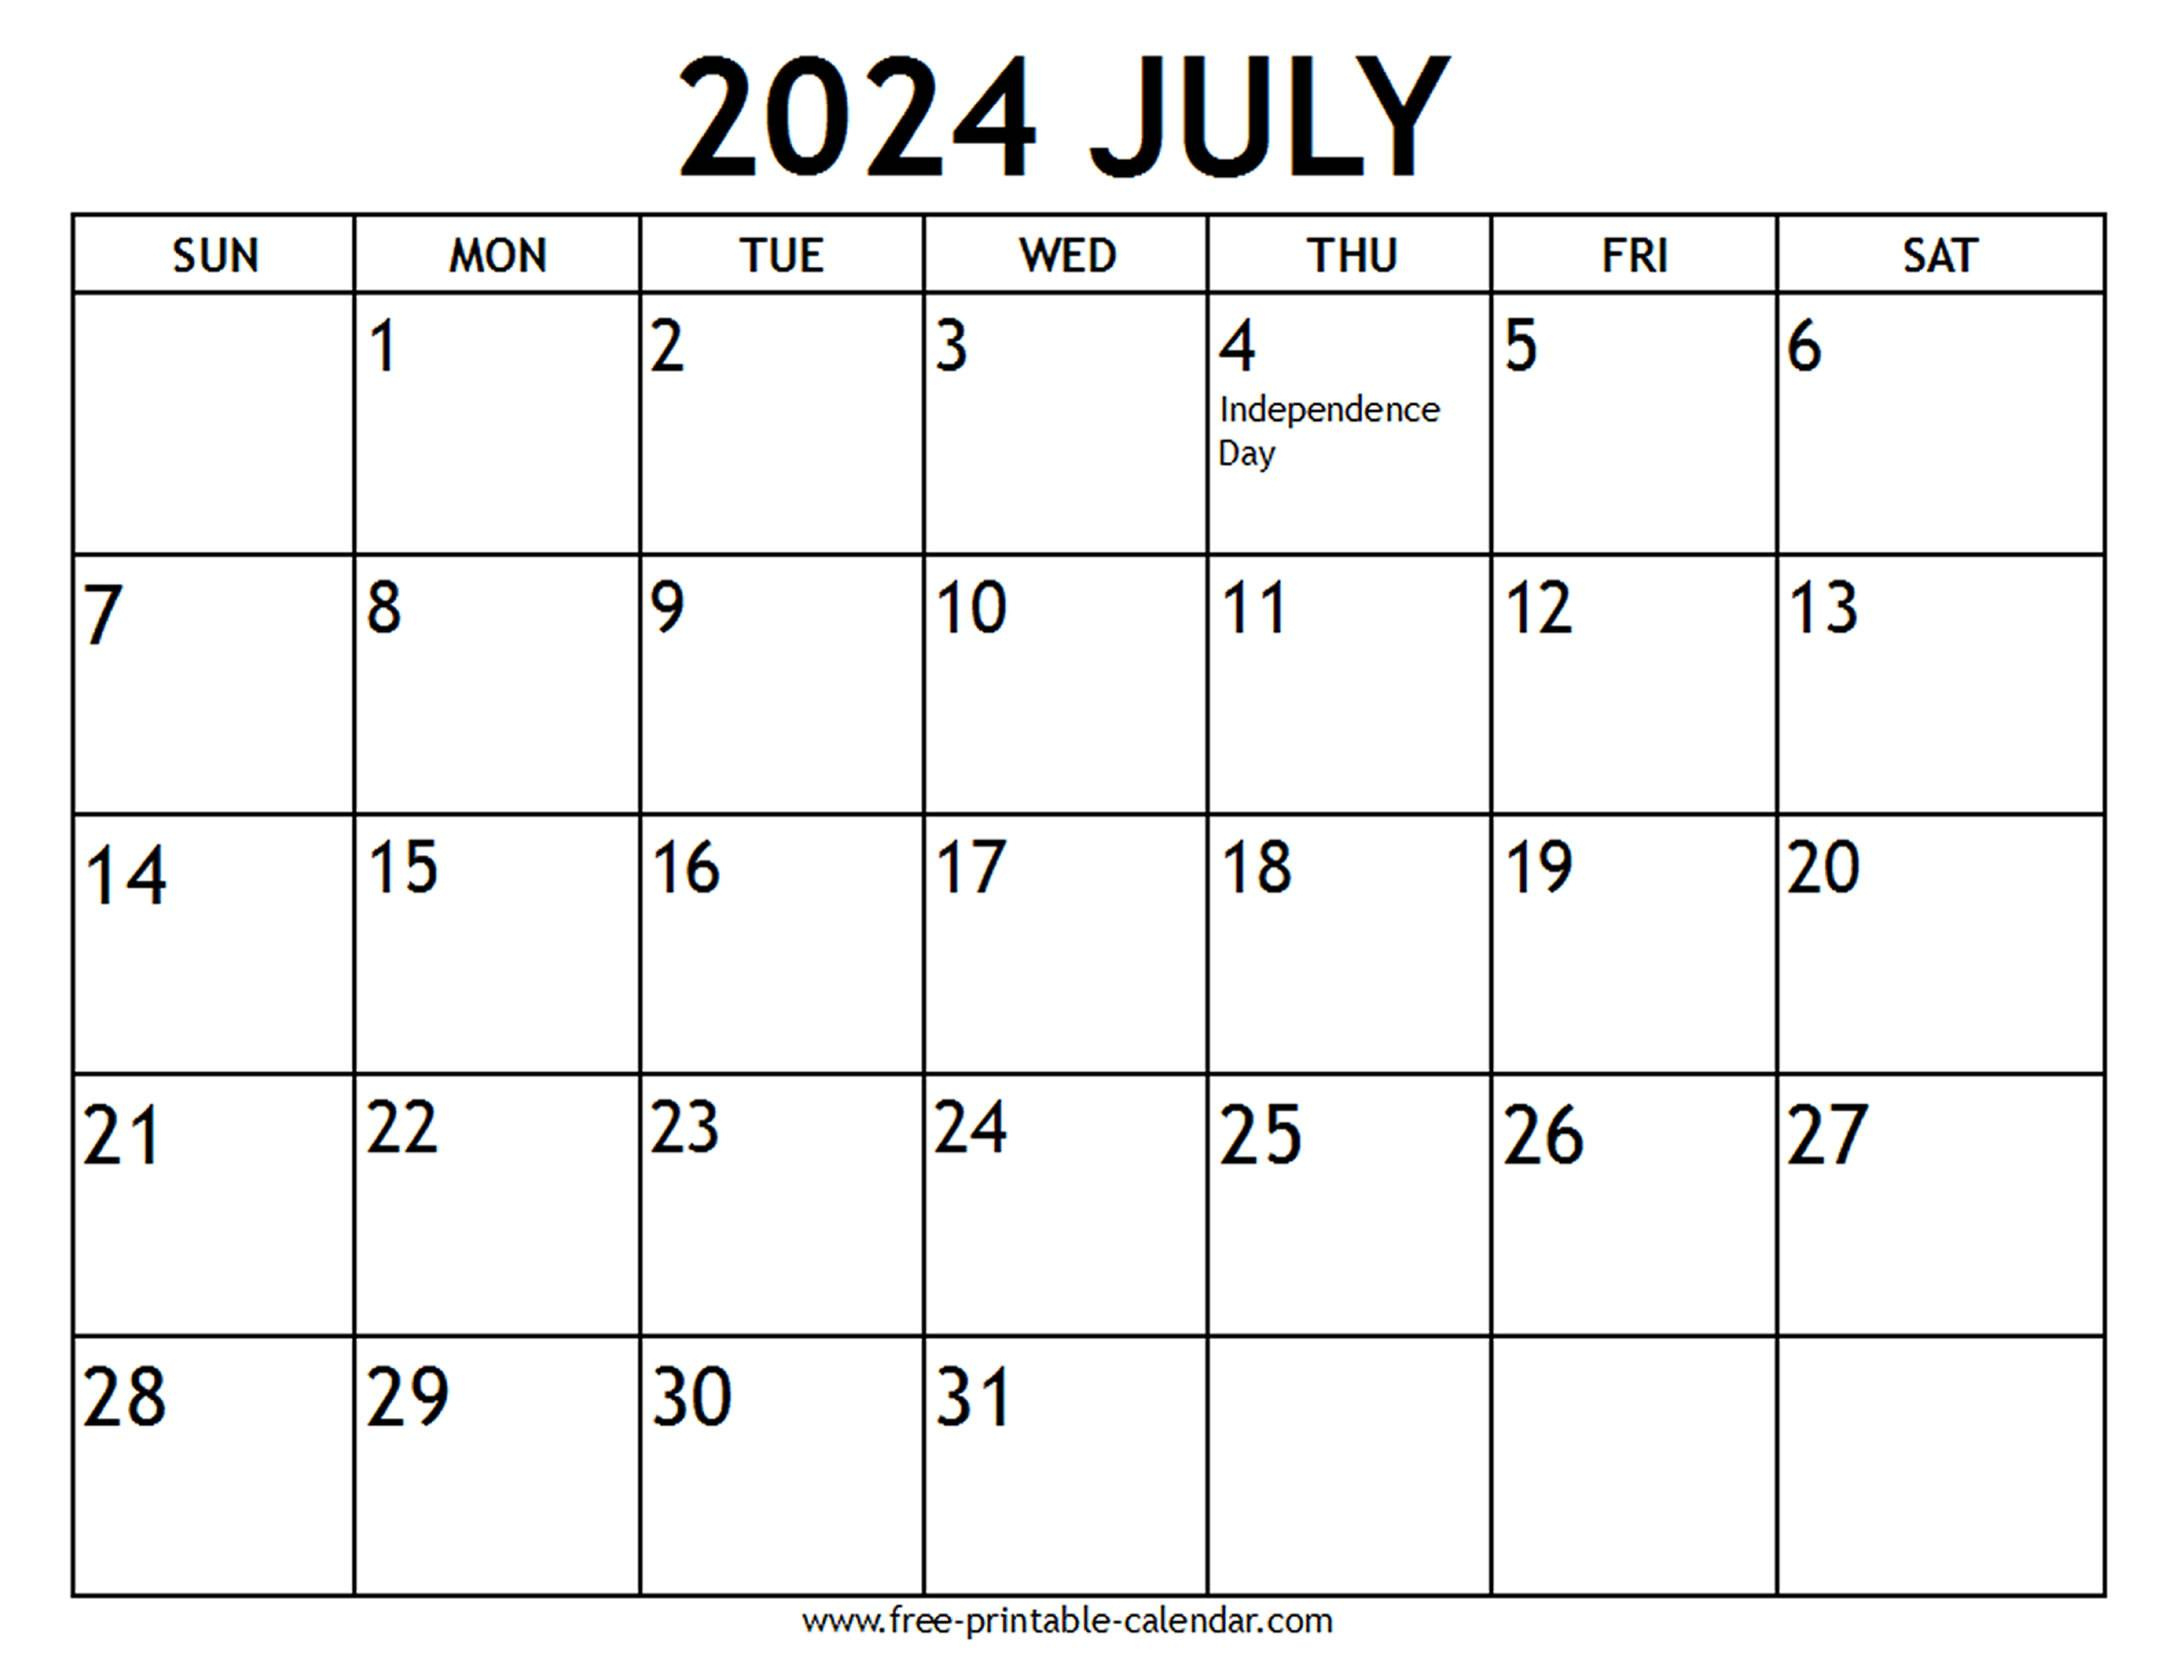 July 2024 Calendar Us Holidays - Free-Printable-Calendar with July 2024 Us Calendar